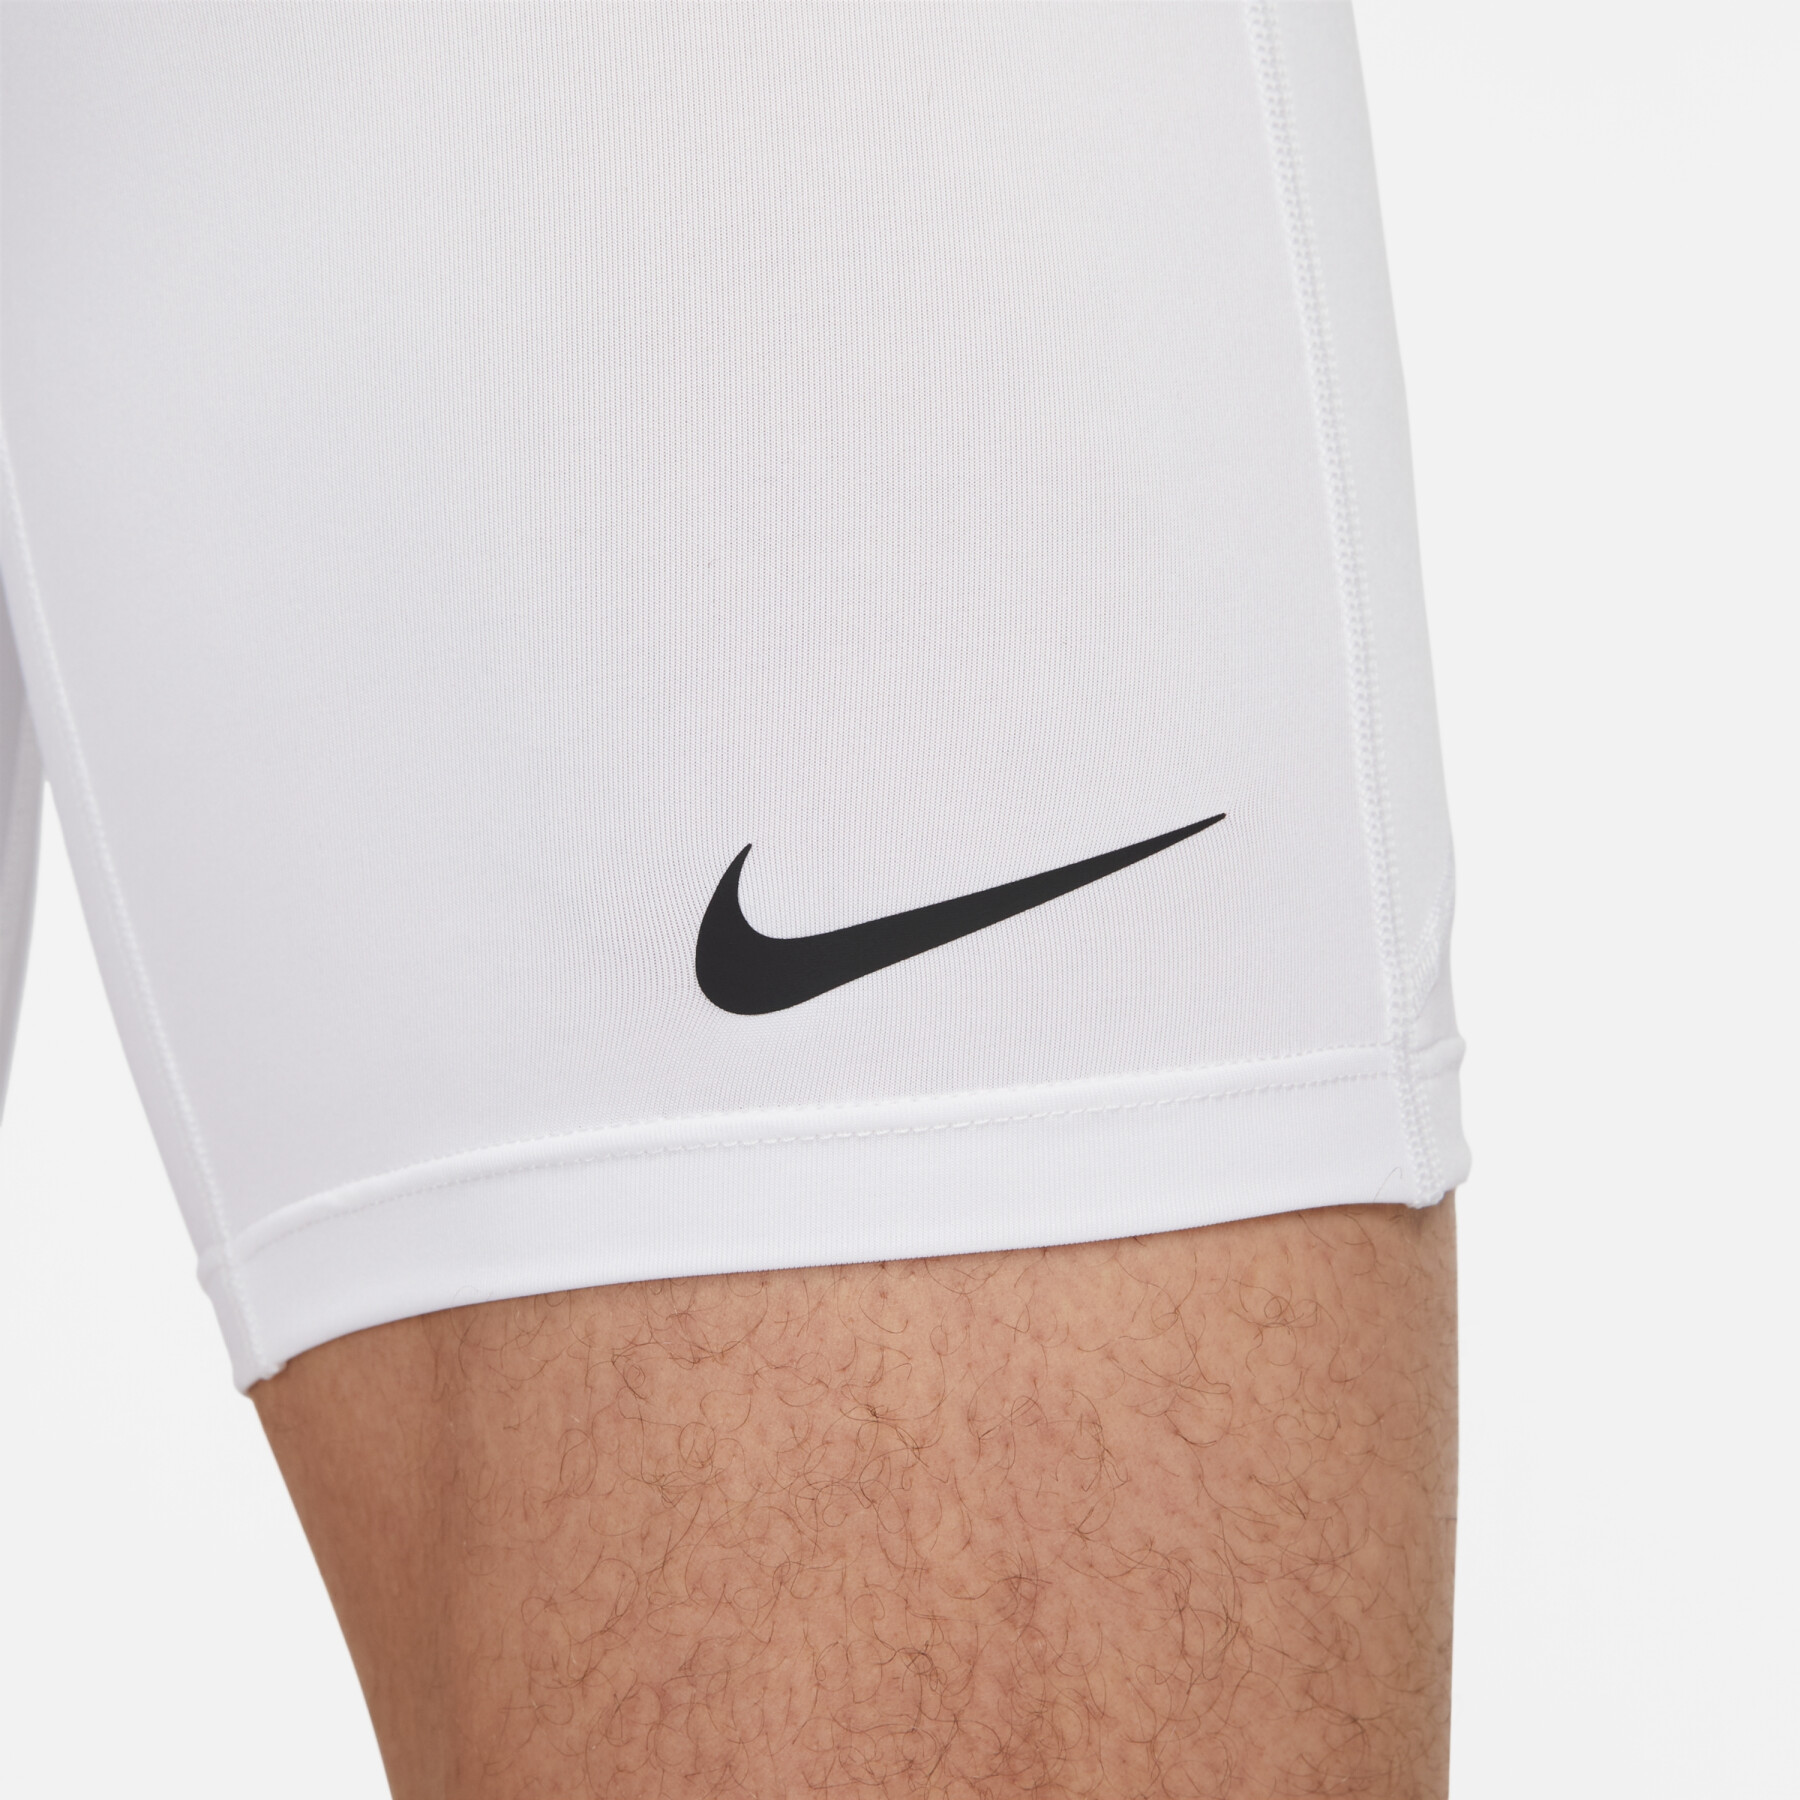 Short Nike Pro